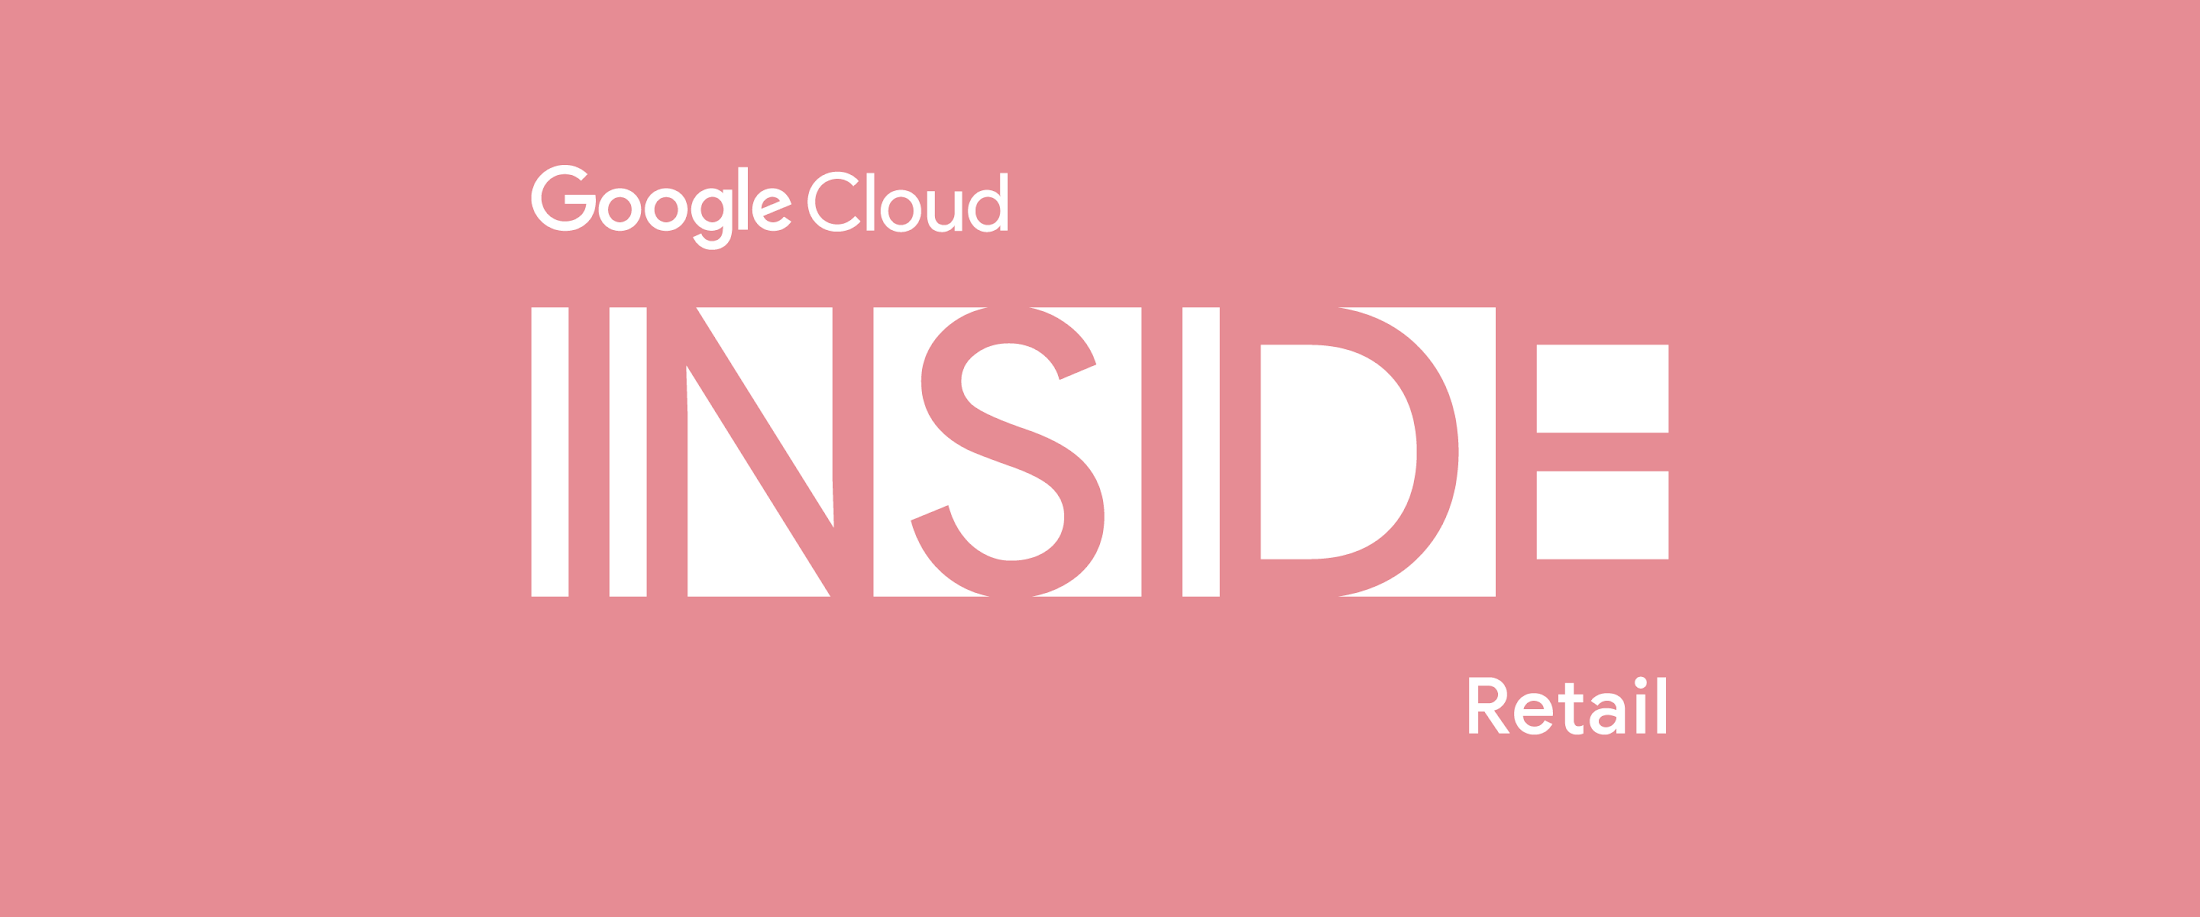 Google Cloud Inside Retail Logo